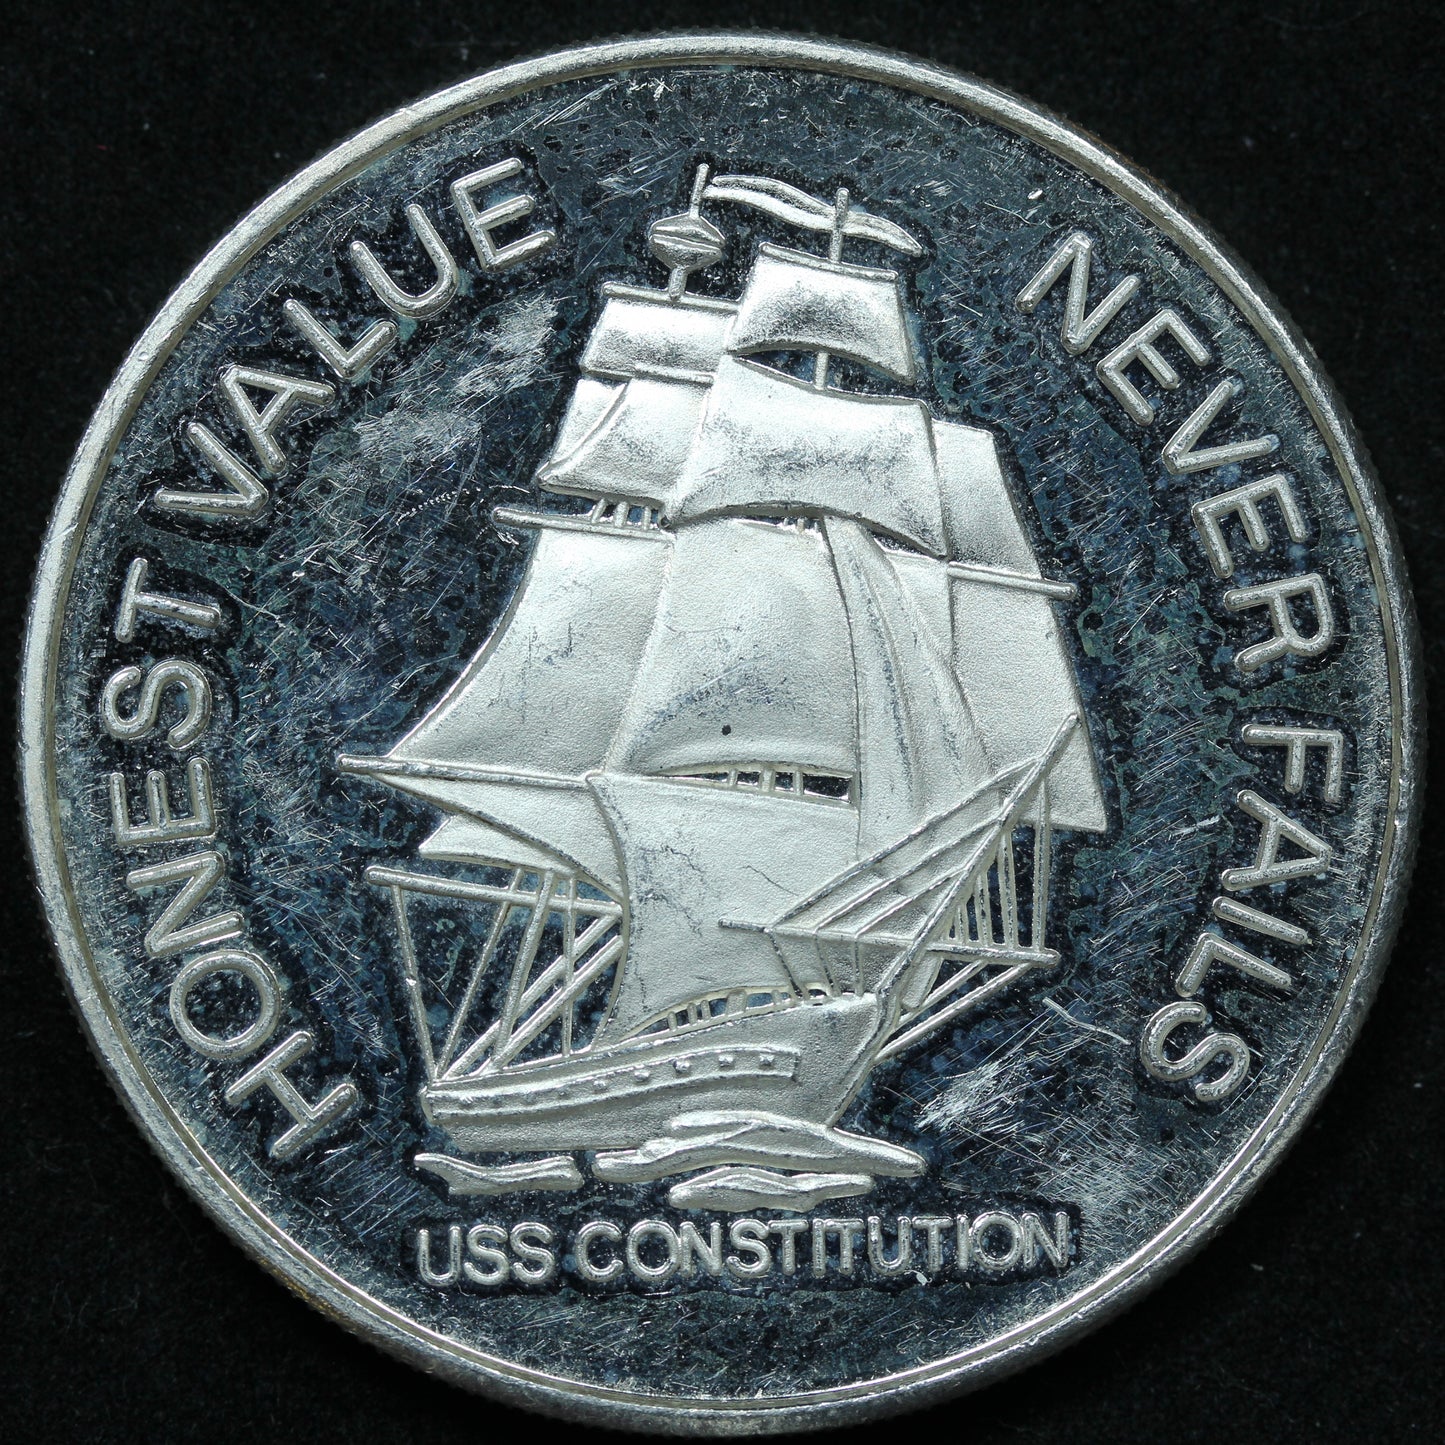 2 oz .999 Fine Silver Round Honest Value Never Fails Liberty Mint